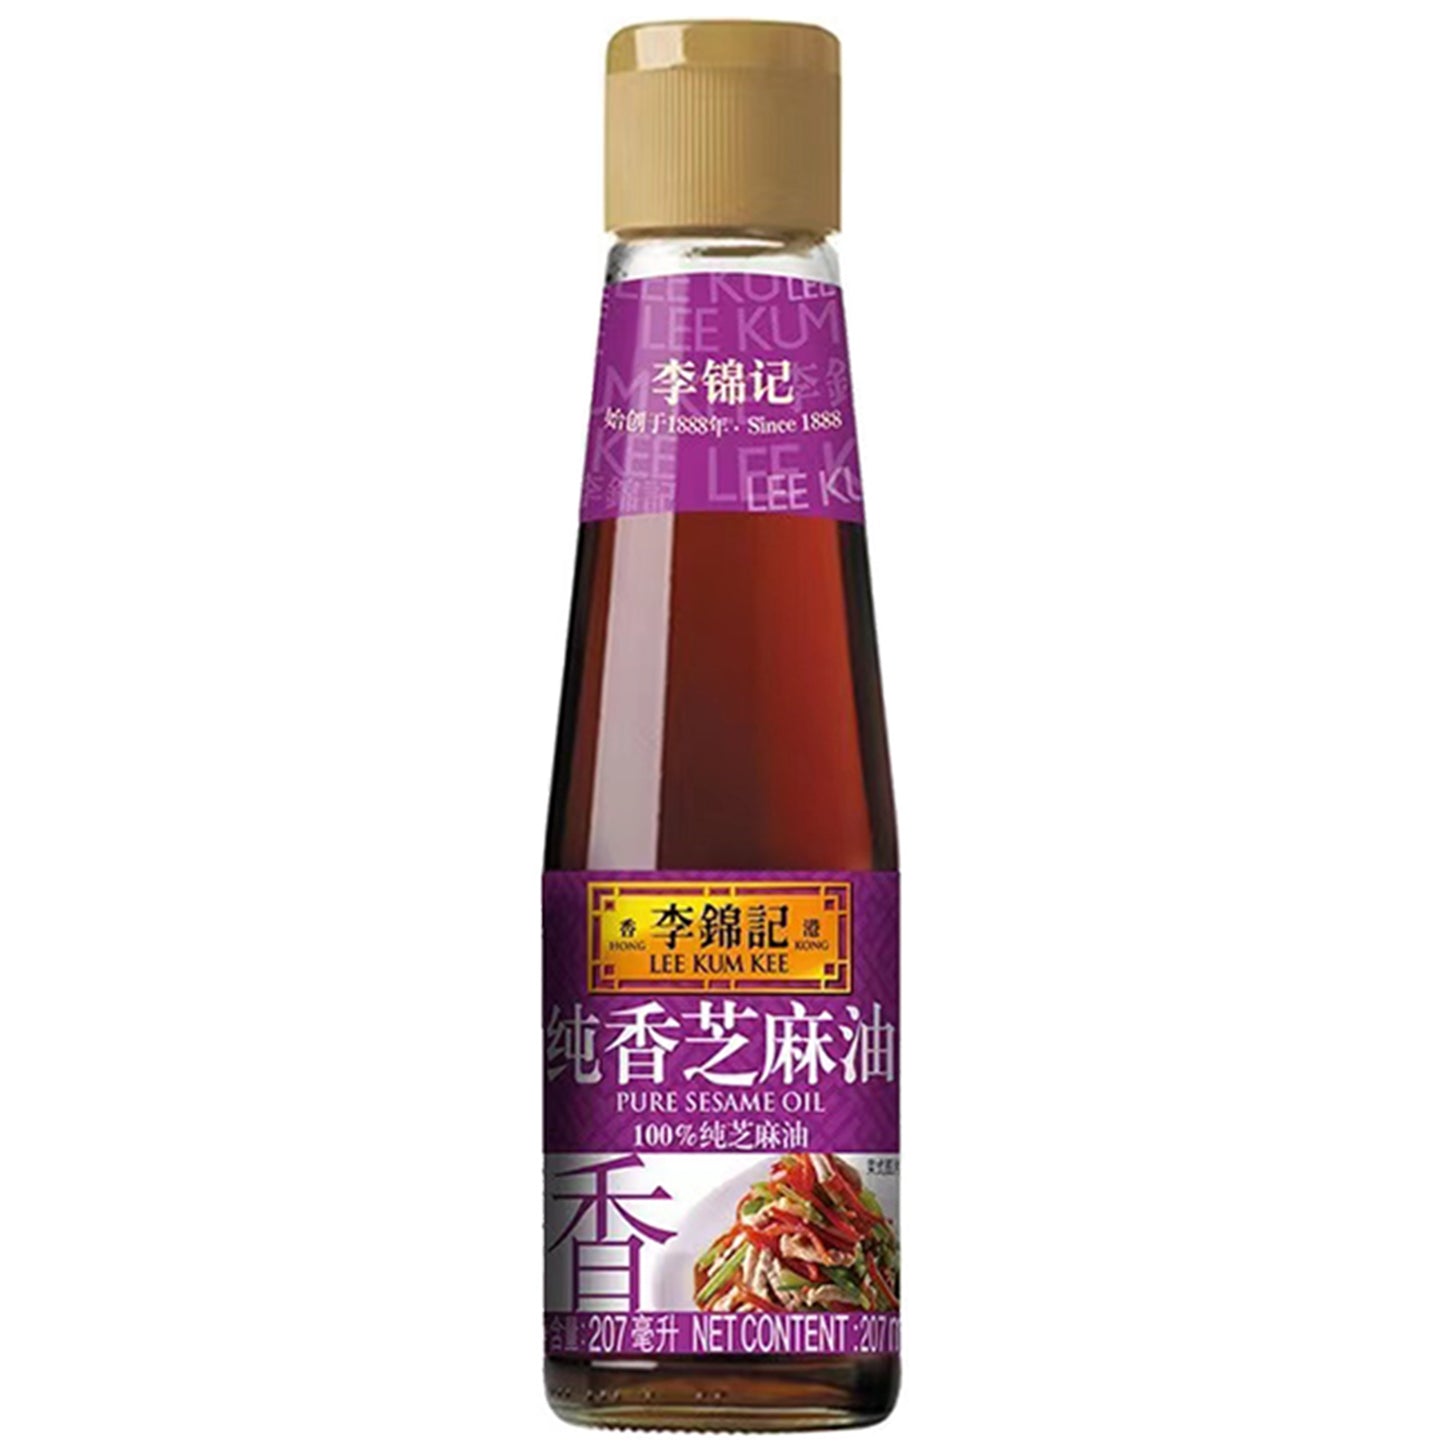 Pure Sesame Oil (207 ml)